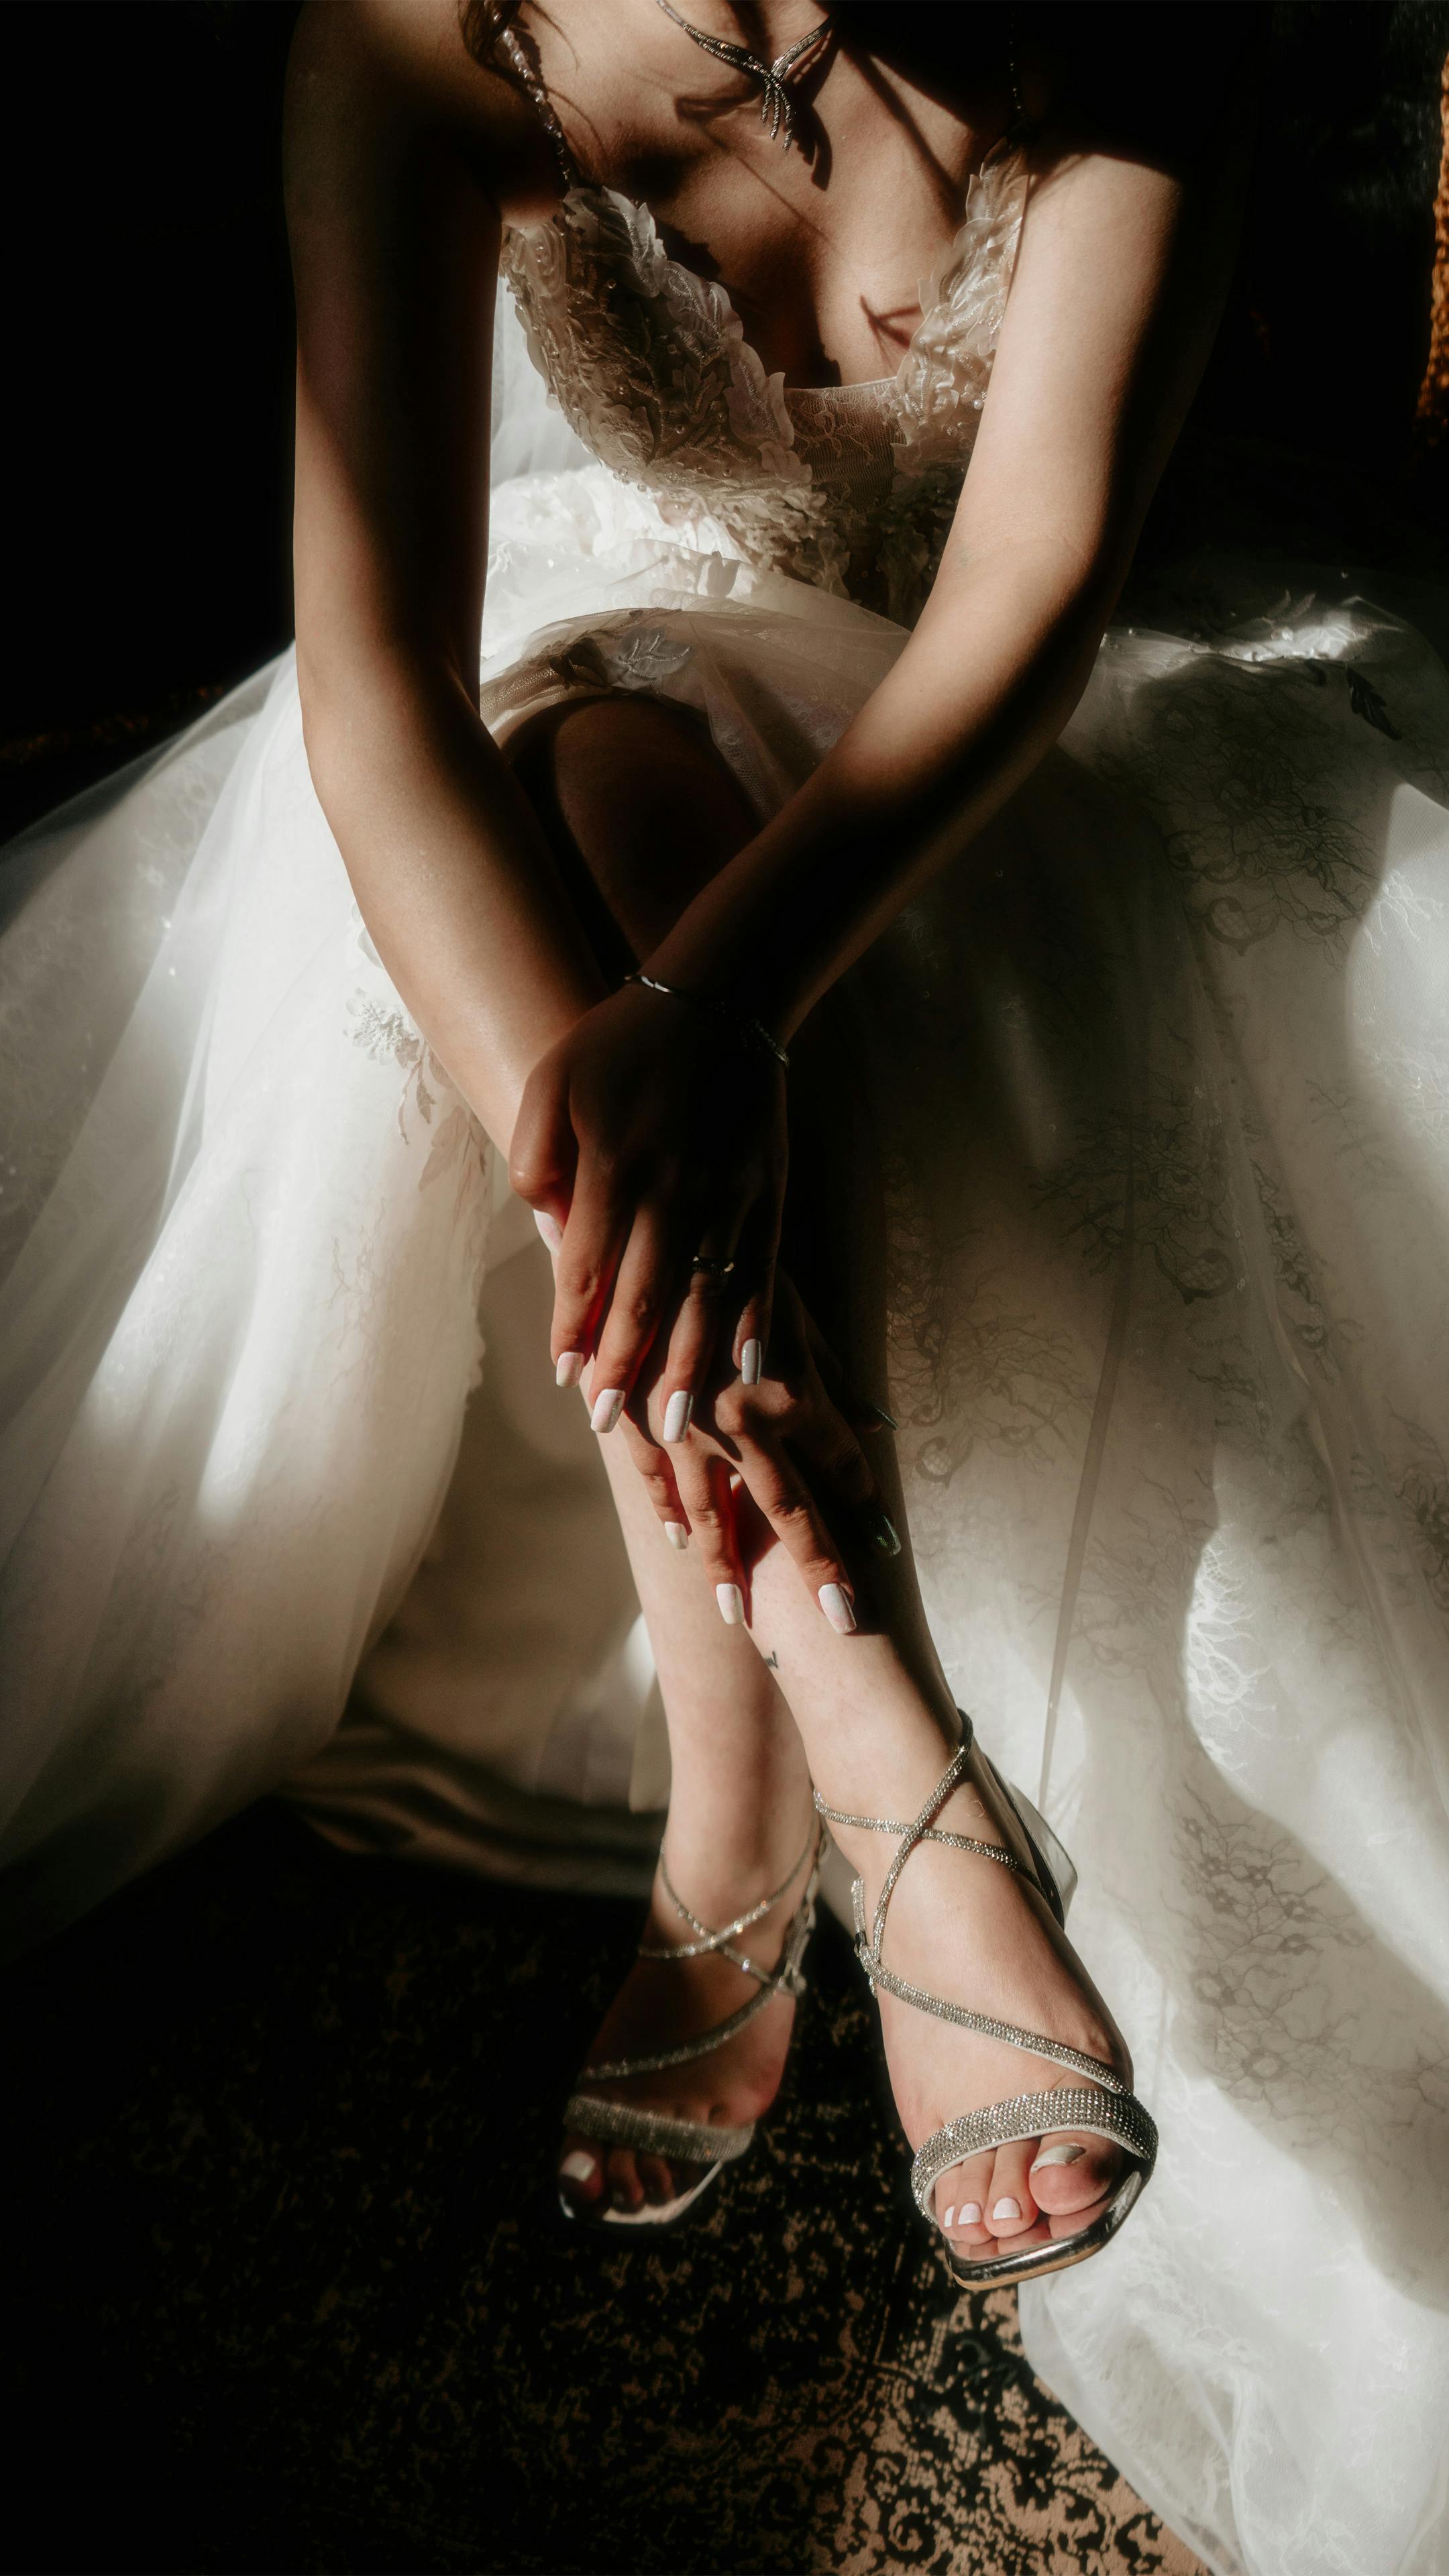 A woman in a wedding dress | Source: Pexels